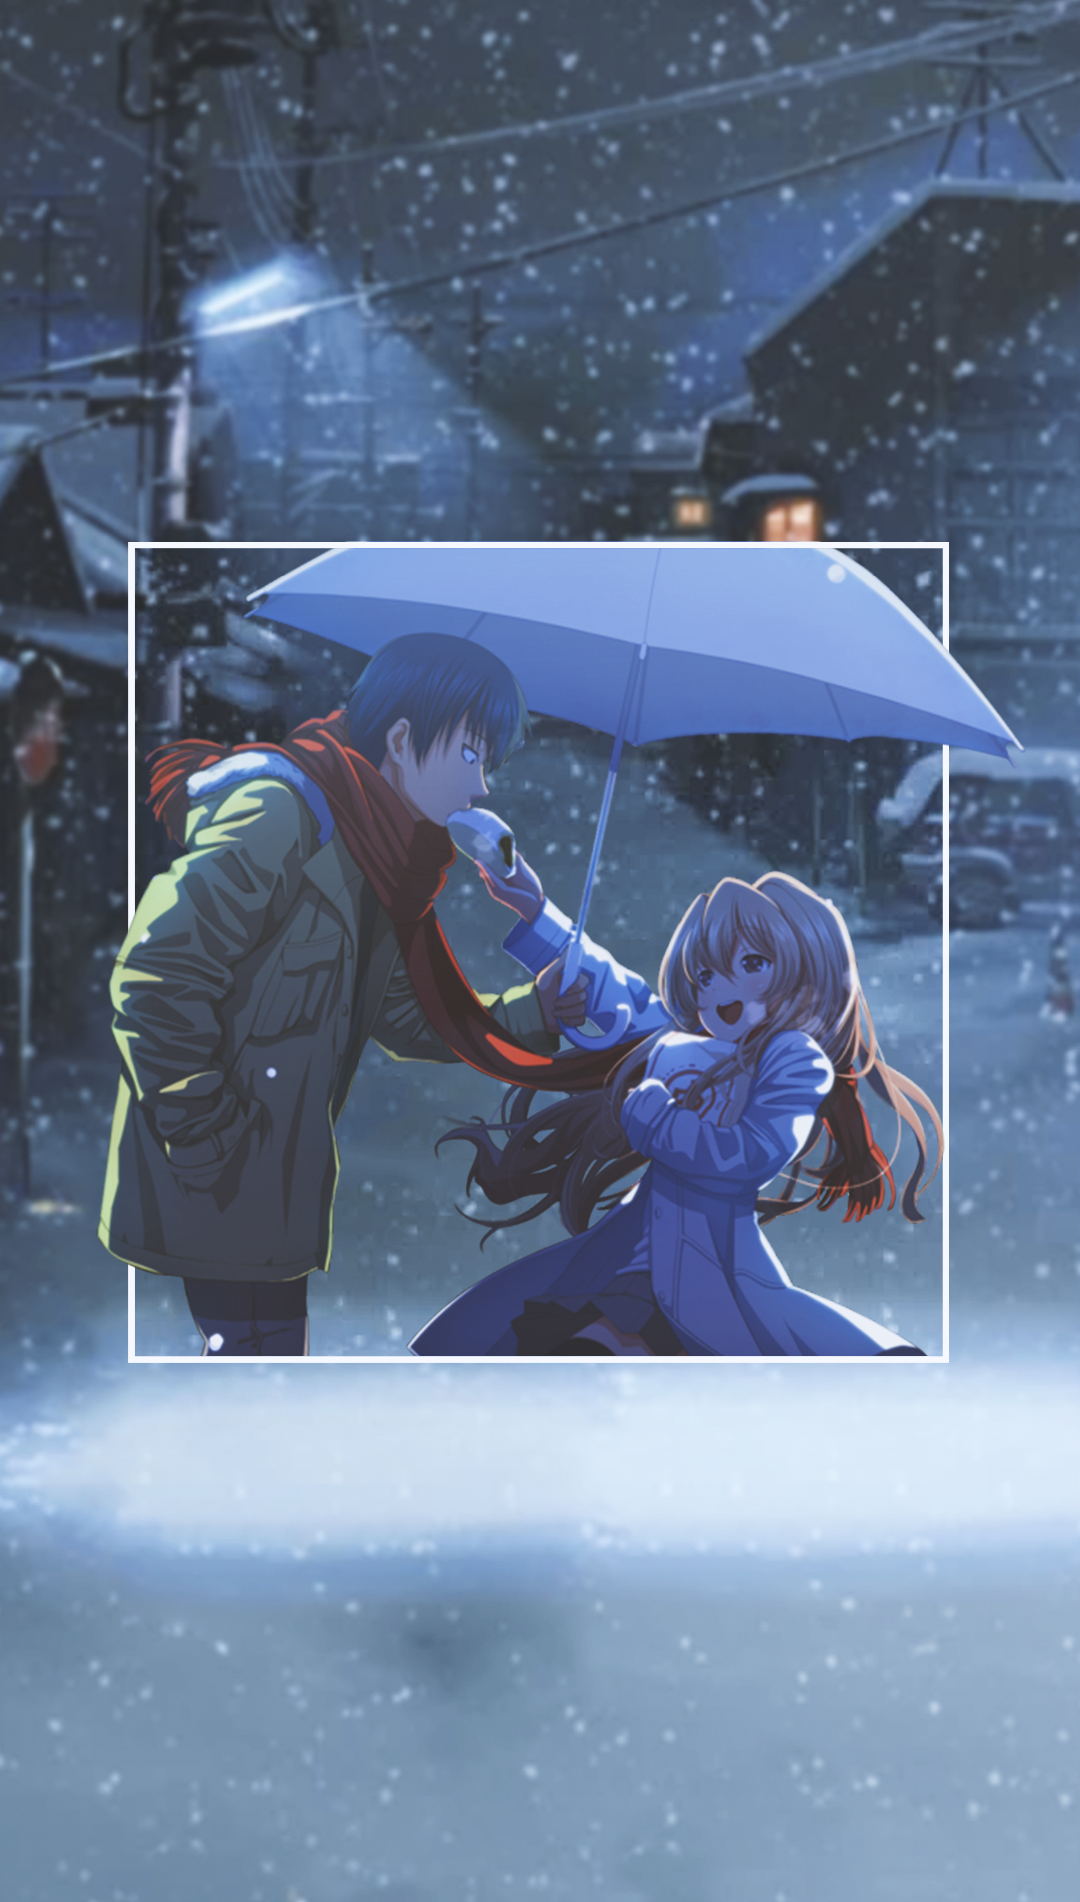 Anime 1080x1902 anime anime girls picture-in-picture umbrella urban winter snow Toradora!